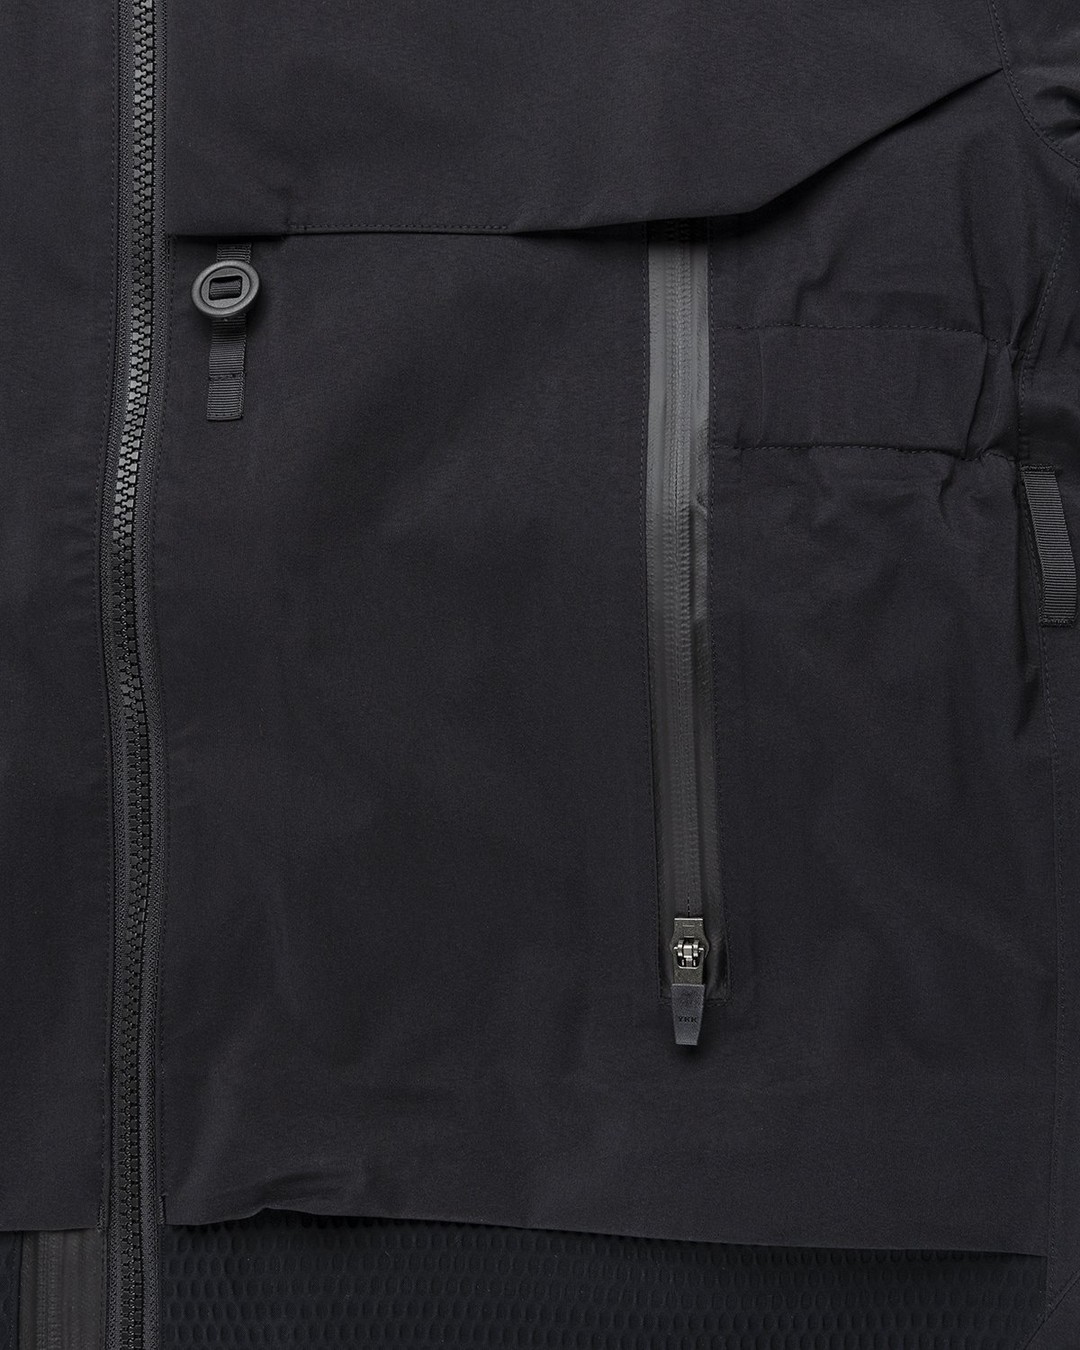 ACRONYM – J16-GT Jacket Black - Outerwear - Black - Image 4